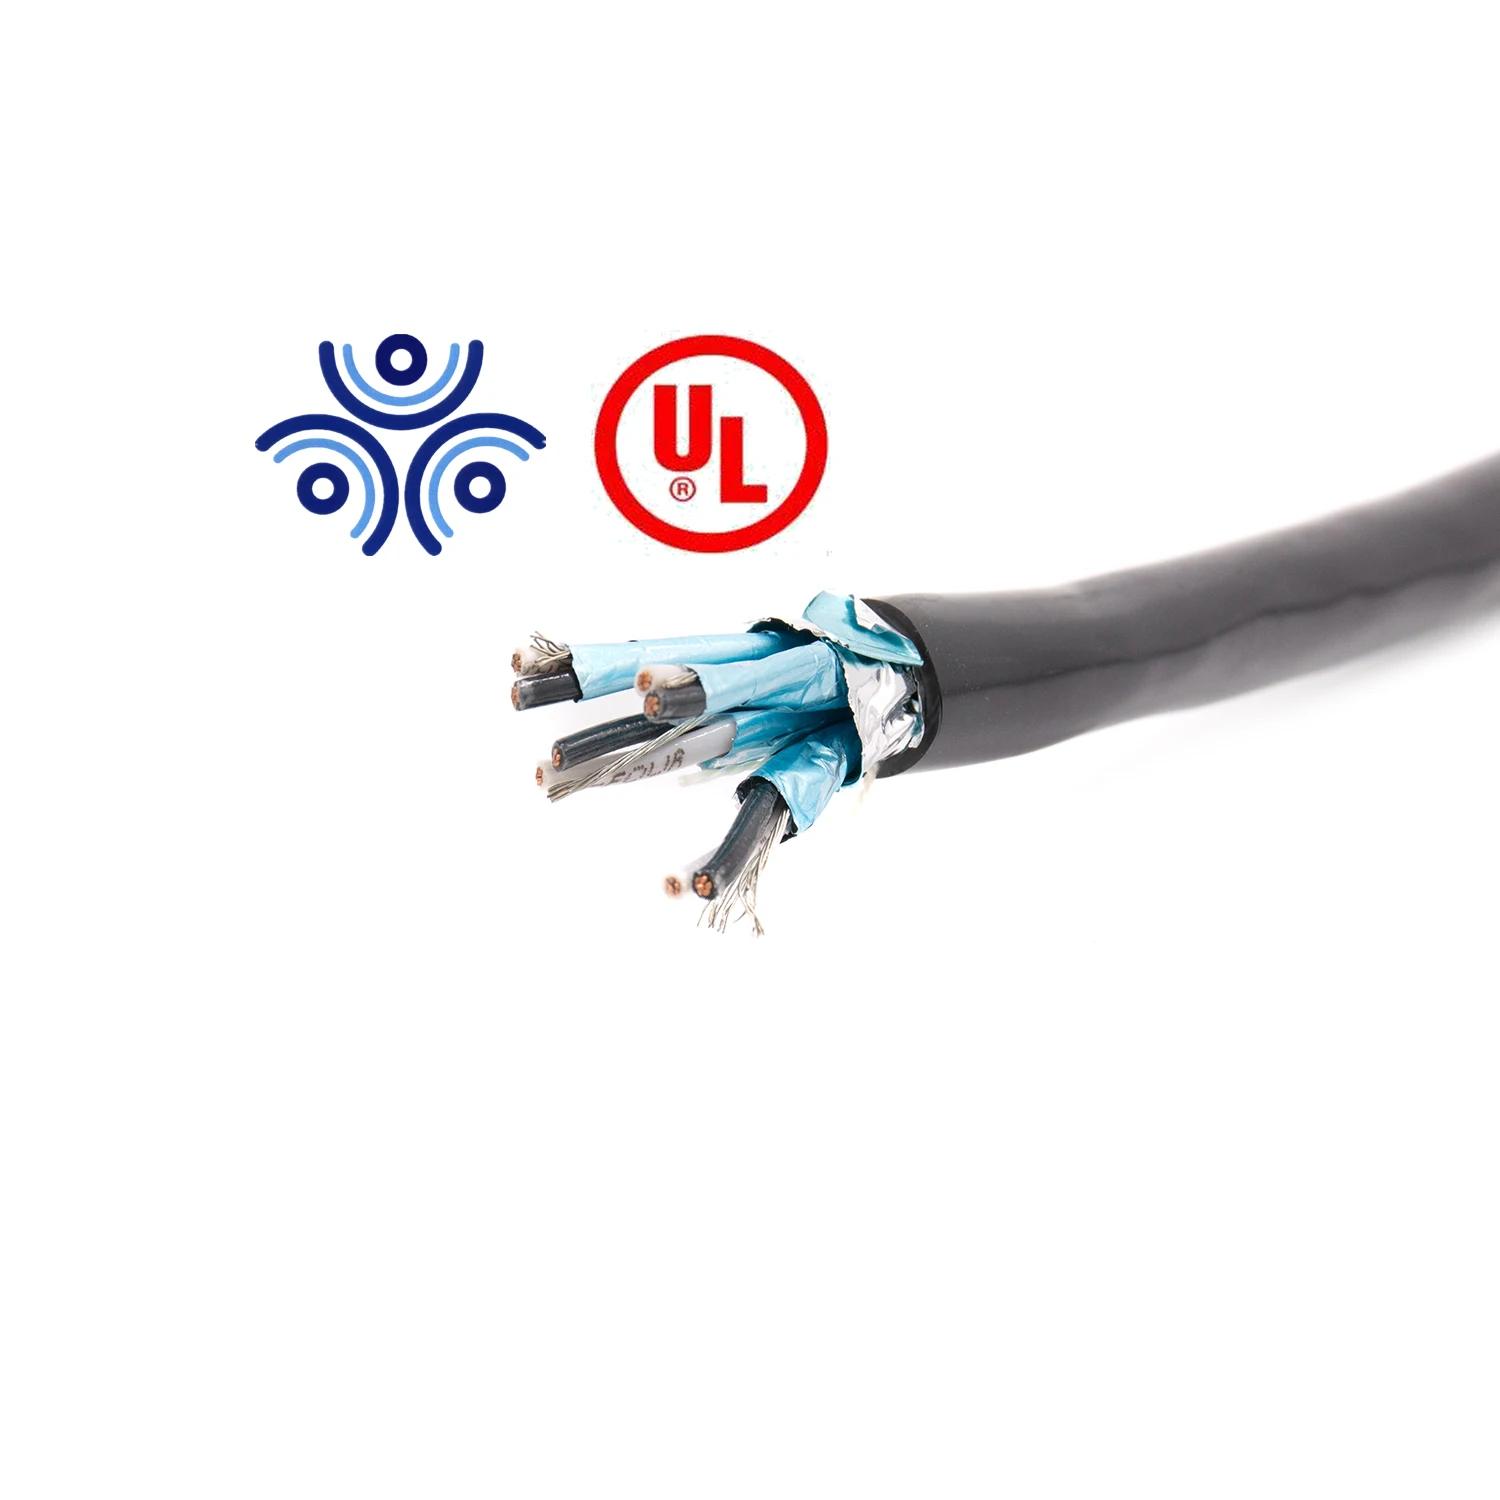 TC-CIC 1000V, 3+G C #12 Str BC, XLPE, Blk PVC 90C Dry/Wet C S A HL control UL cables